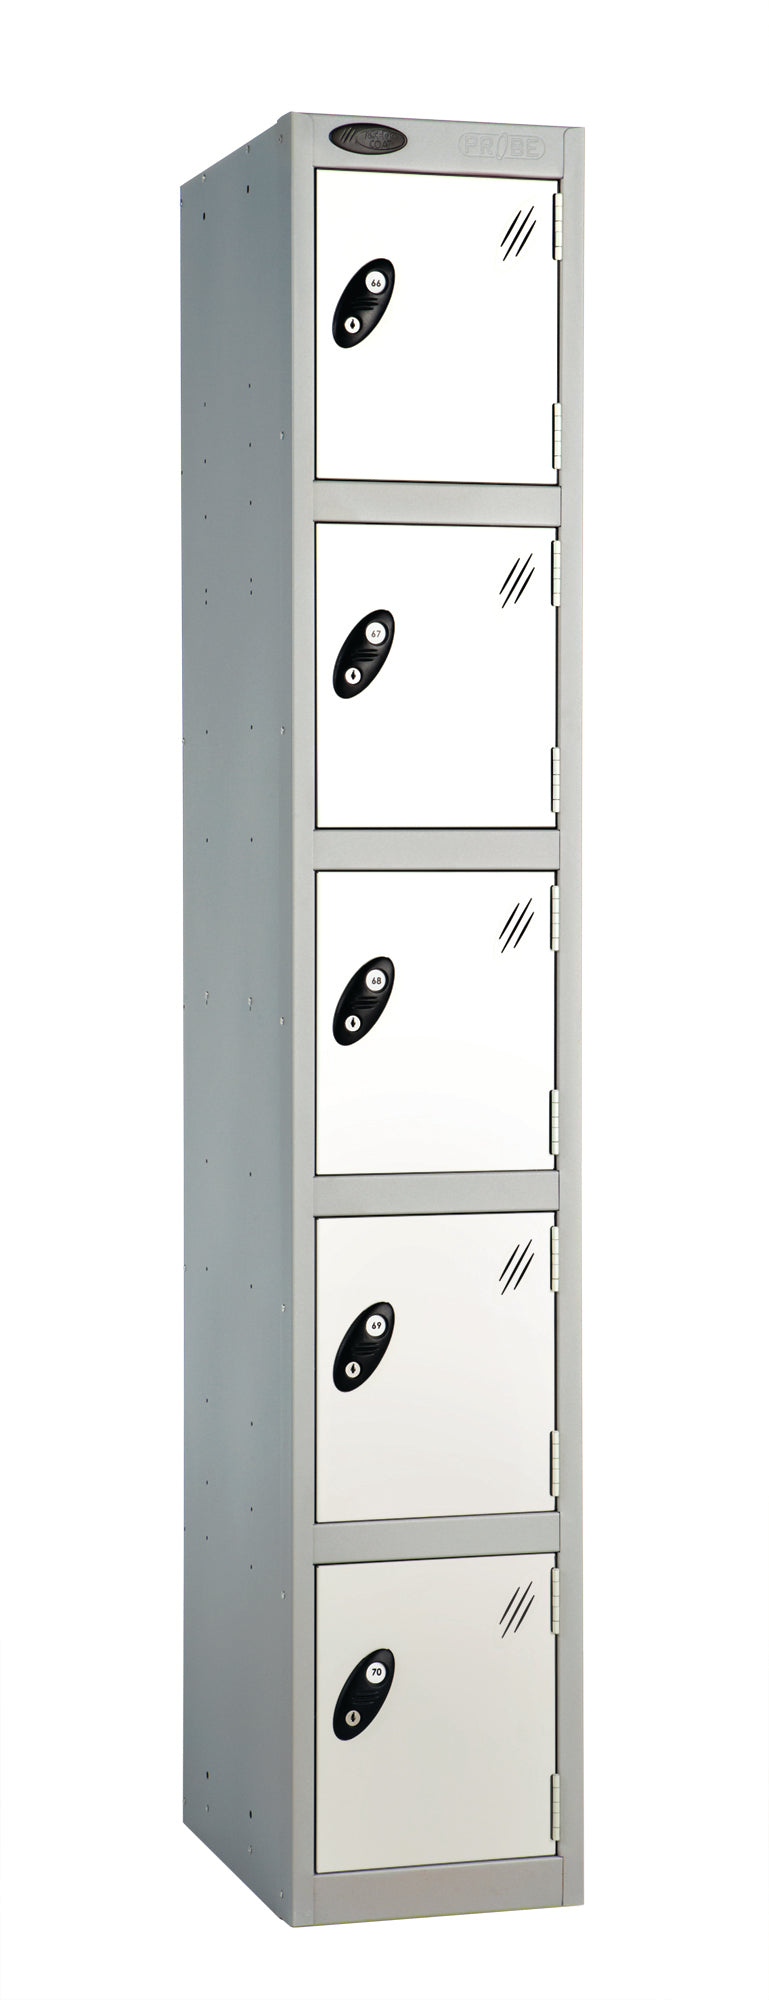 PROBEBOX STANDARD 1 NEST STEEL LOCKERS - SMOKEY WHITE 5 DOOR Storage Lockers > Lockers > Cabinets > Storage > Probe > One Stop For Safety   